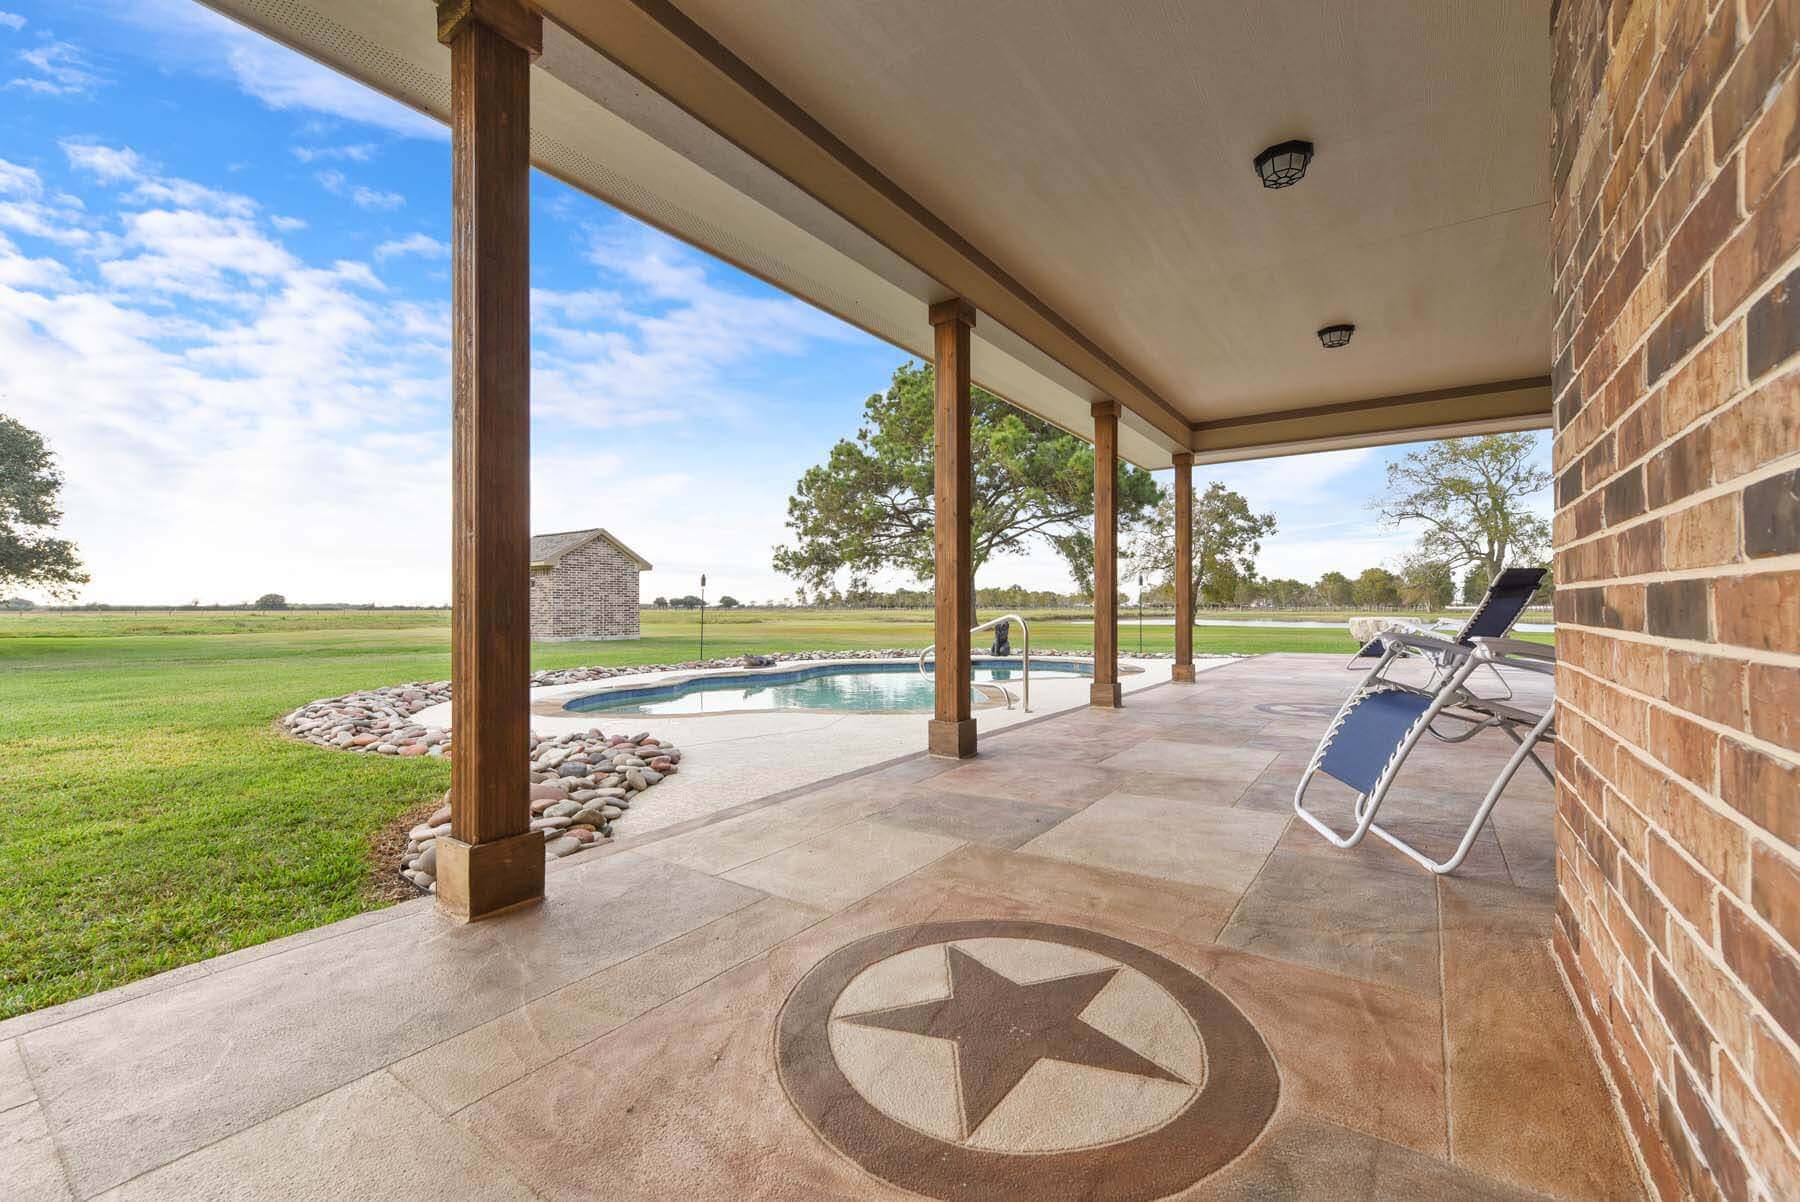 Carvestone overlay patio with custom emblem Texas star design idea